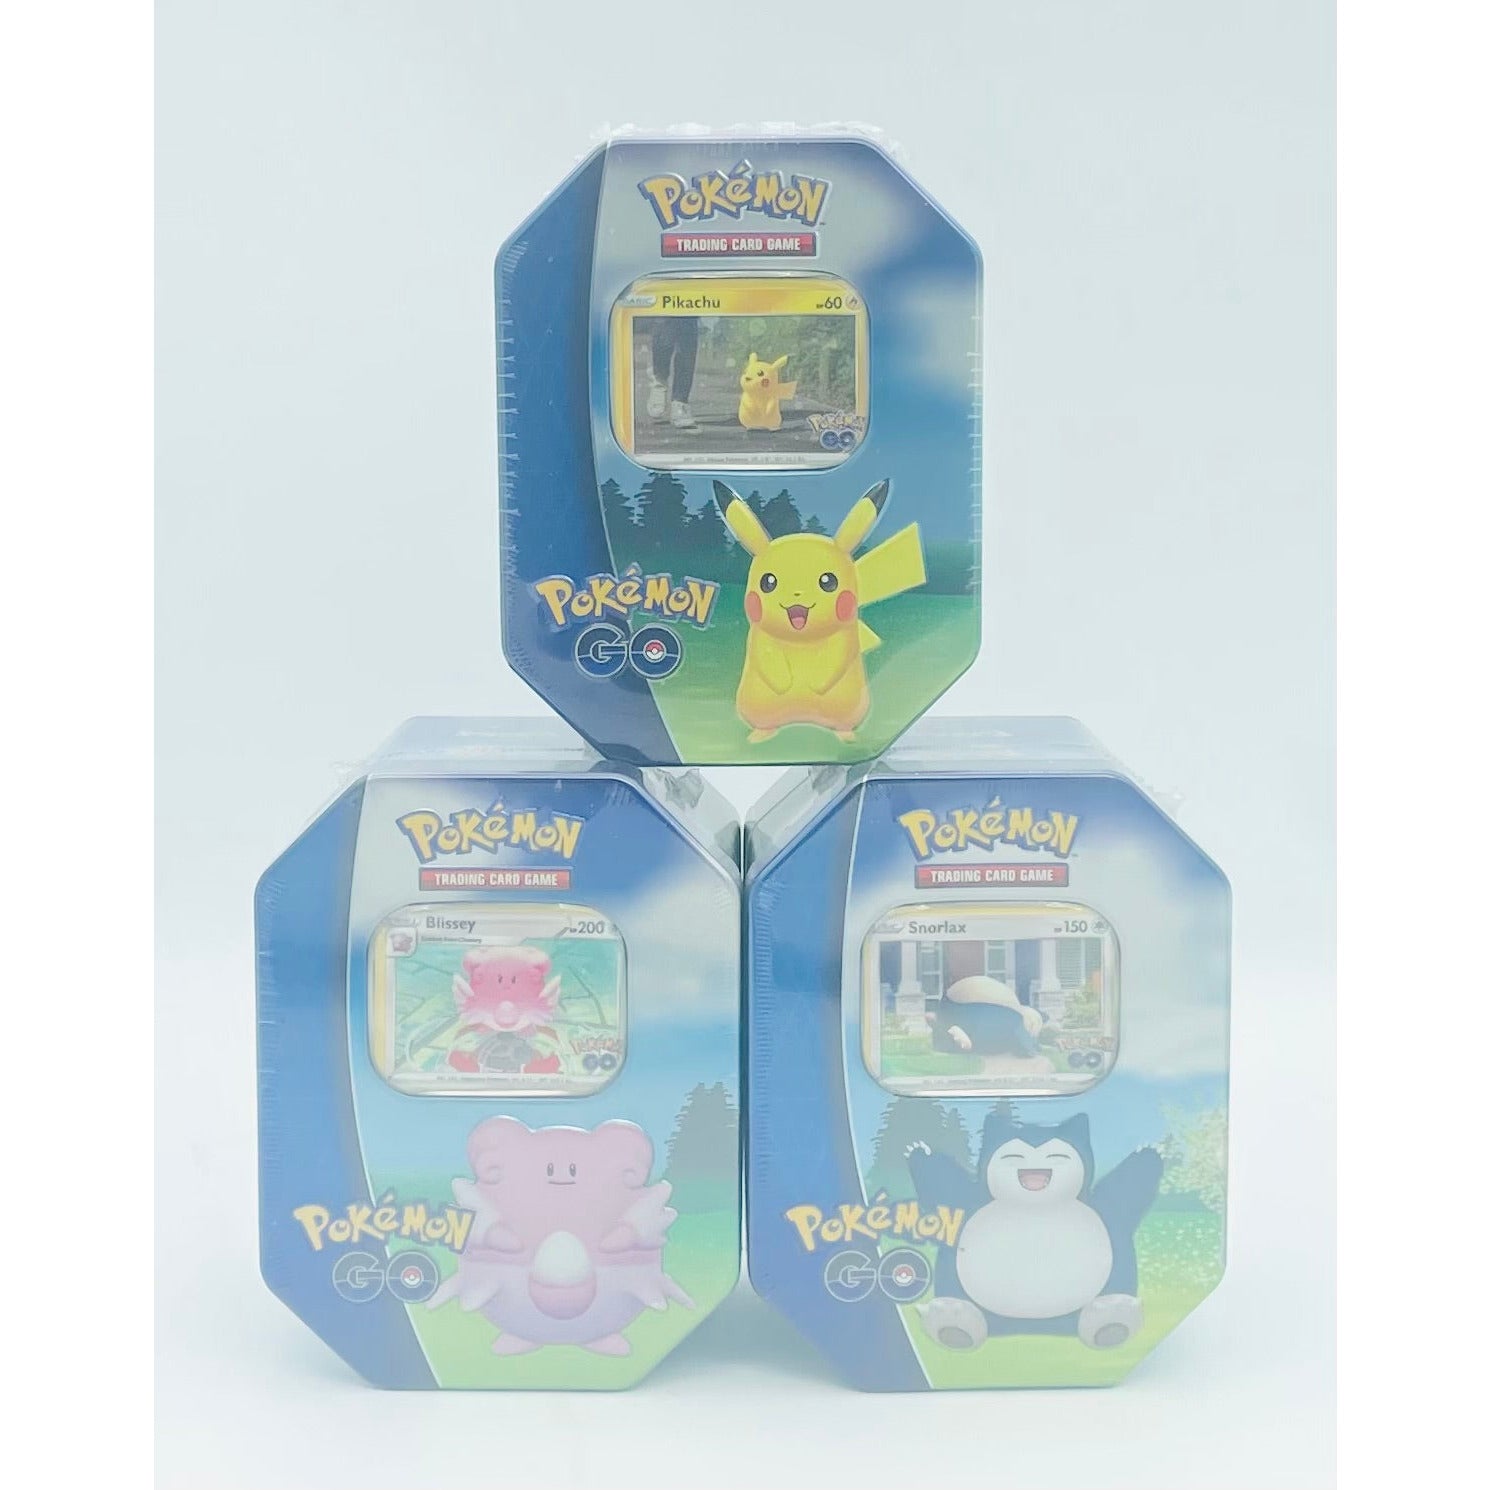 Pokemon TCG: Pokemon GO Gift Tins Set of 3- Pikachu, Snorlax, and Blissey